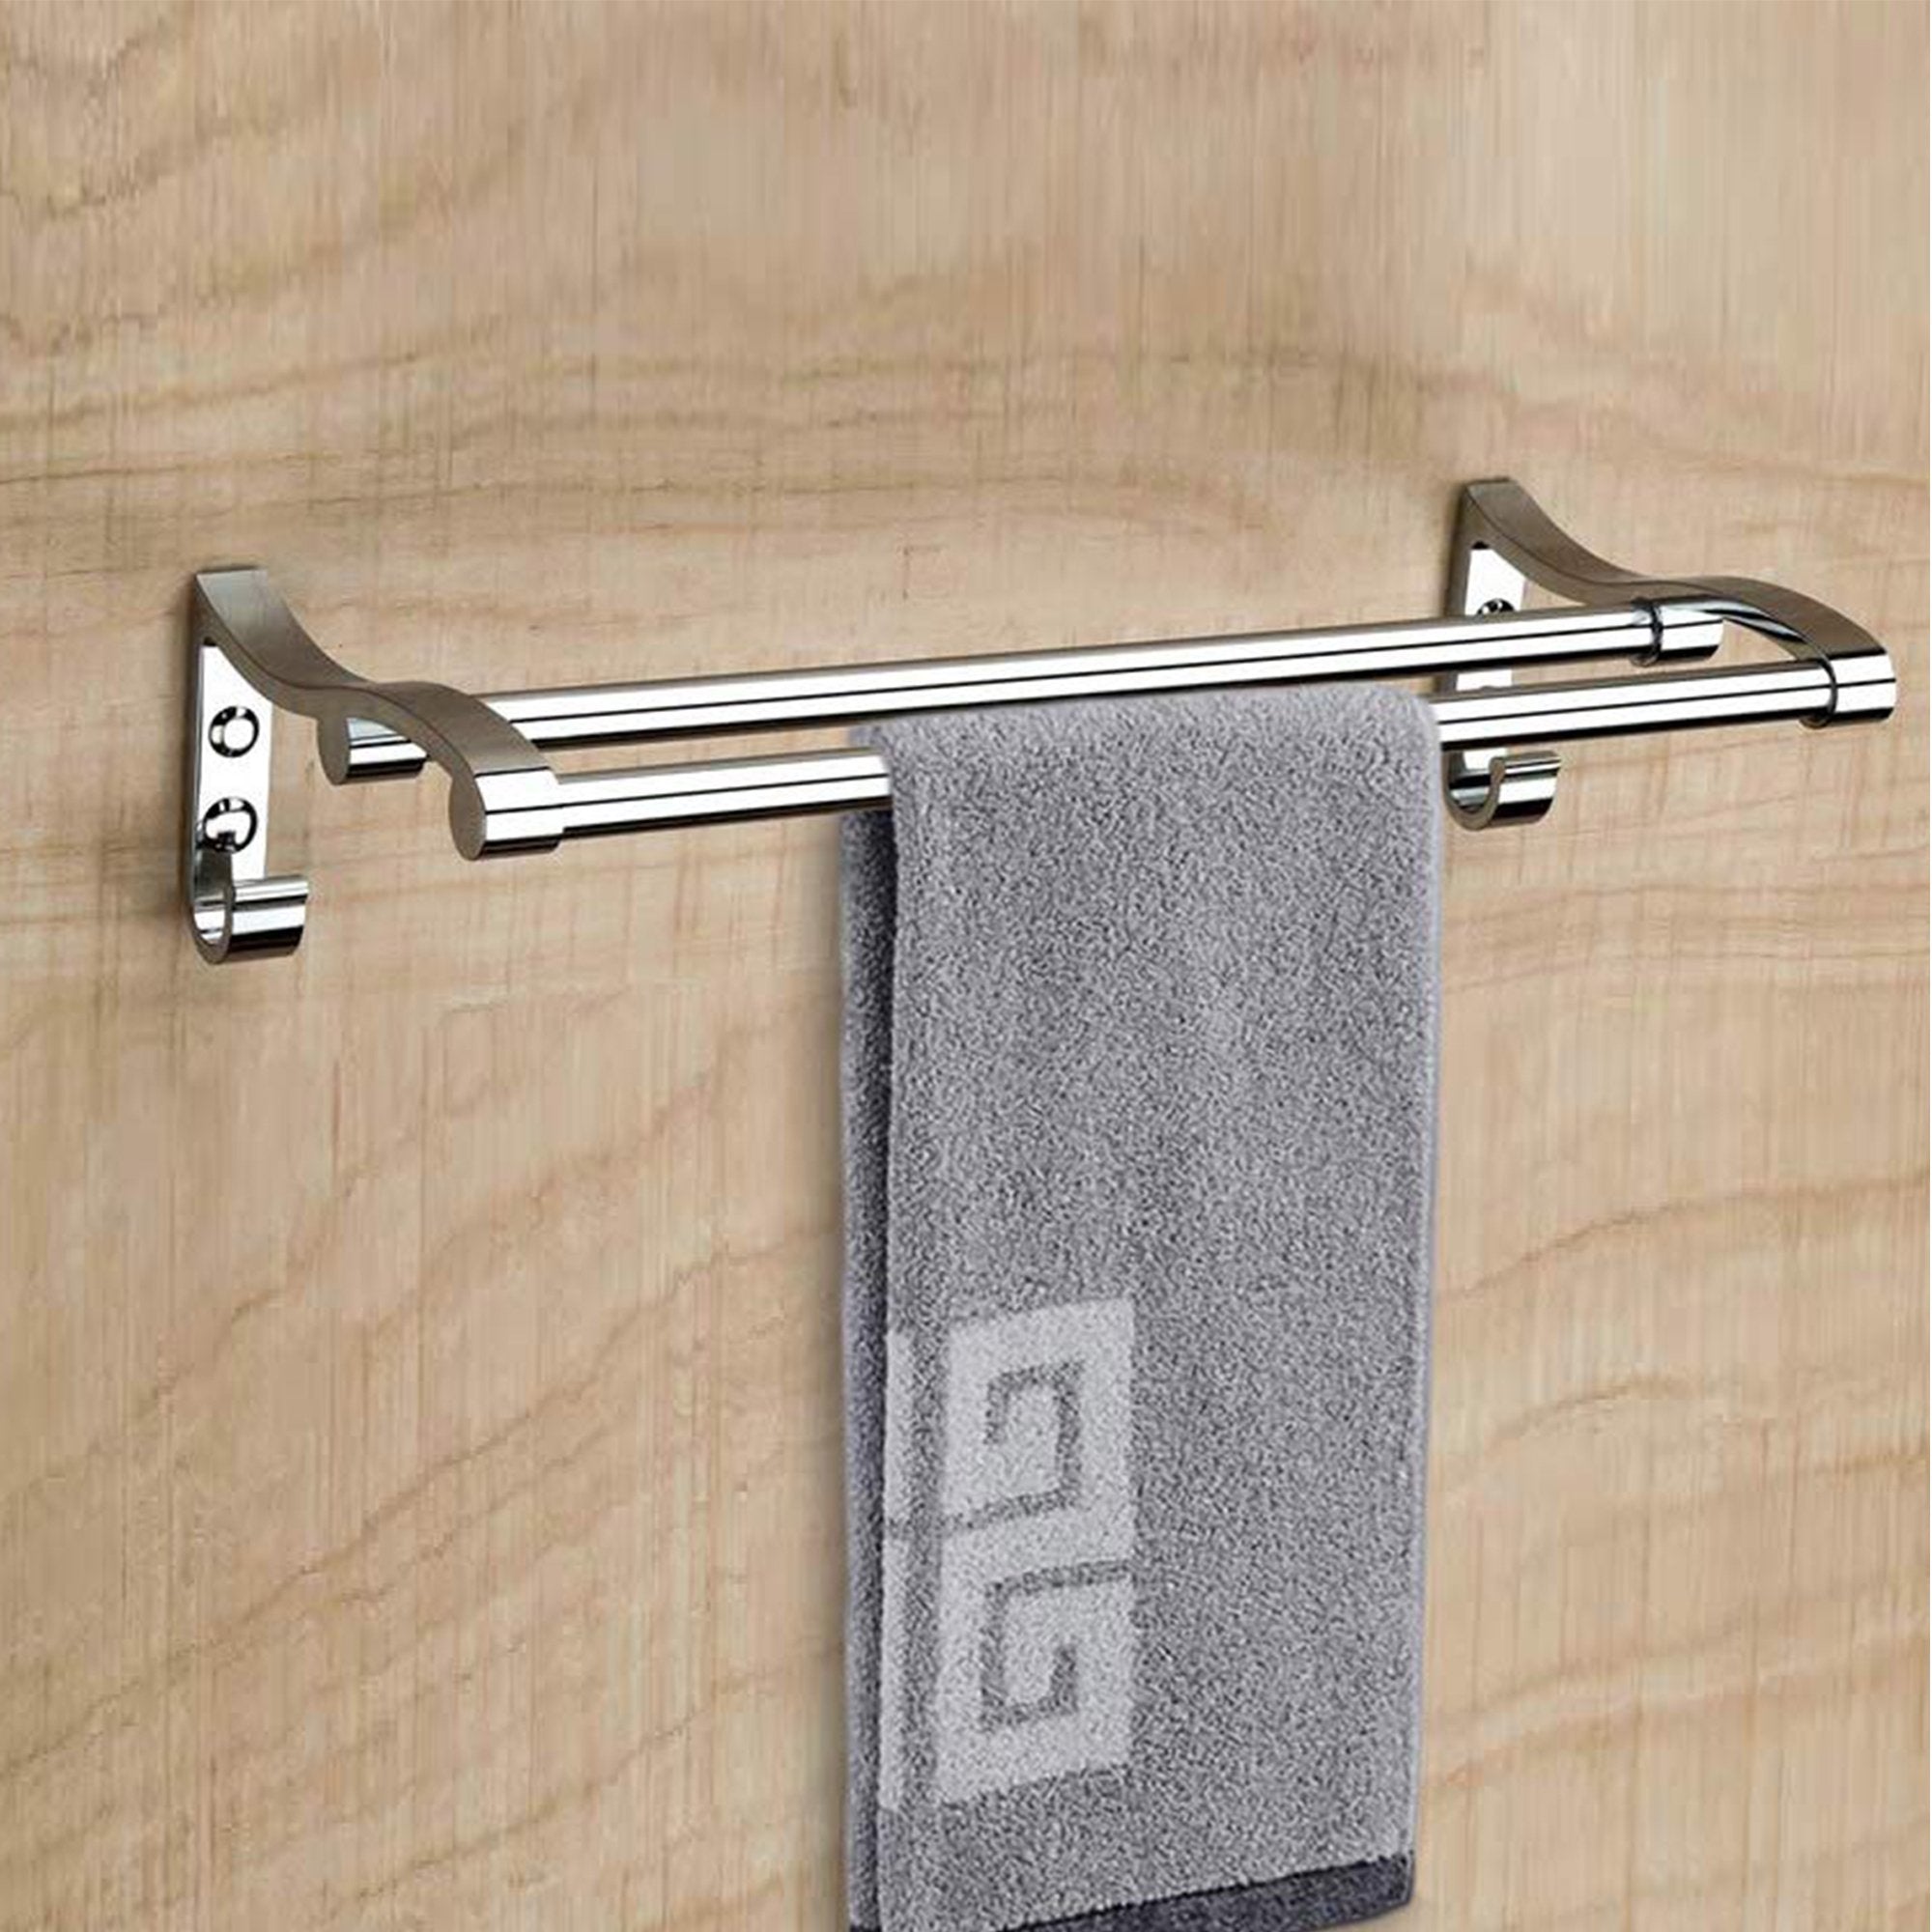 0490 Stainless Steel Towel Rack Cum Towel Bar 24 Inch - SkyShopy